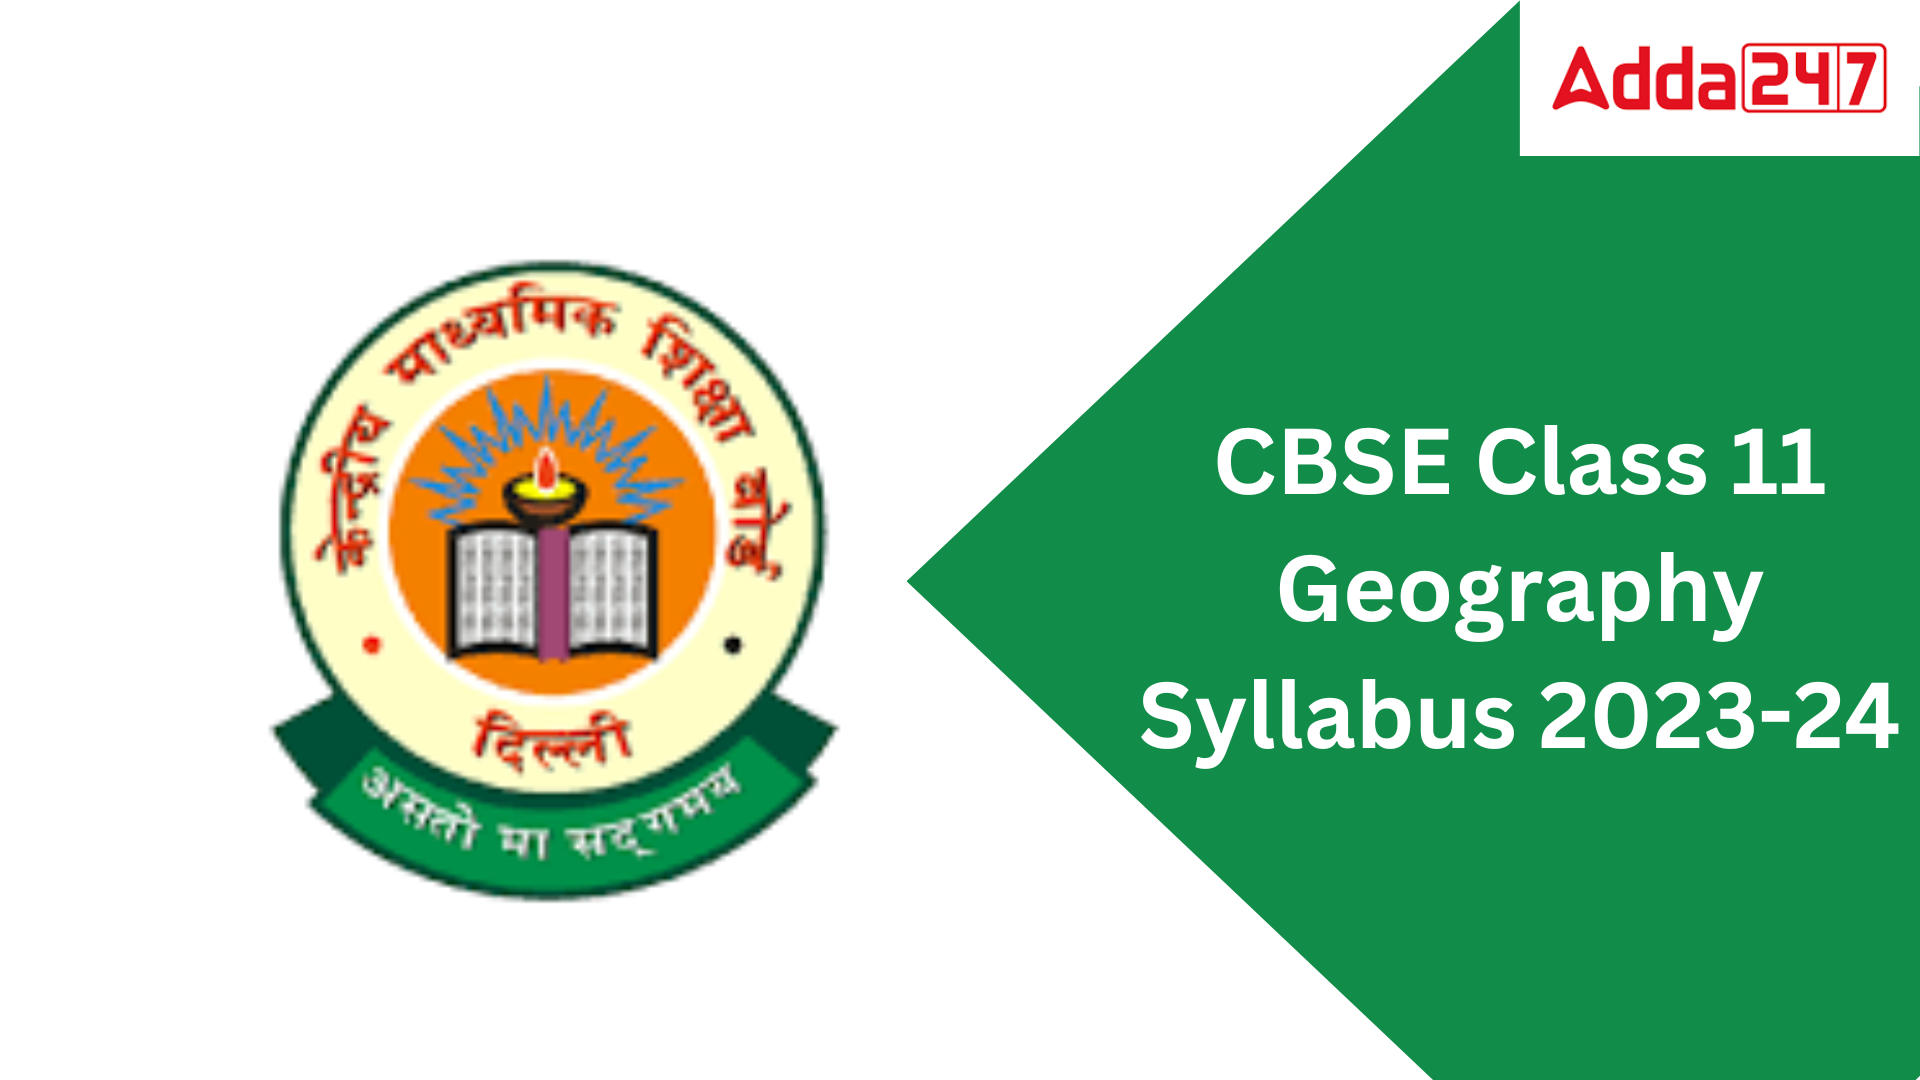 CBSE Class 11 Geography Syllabus 2023-24